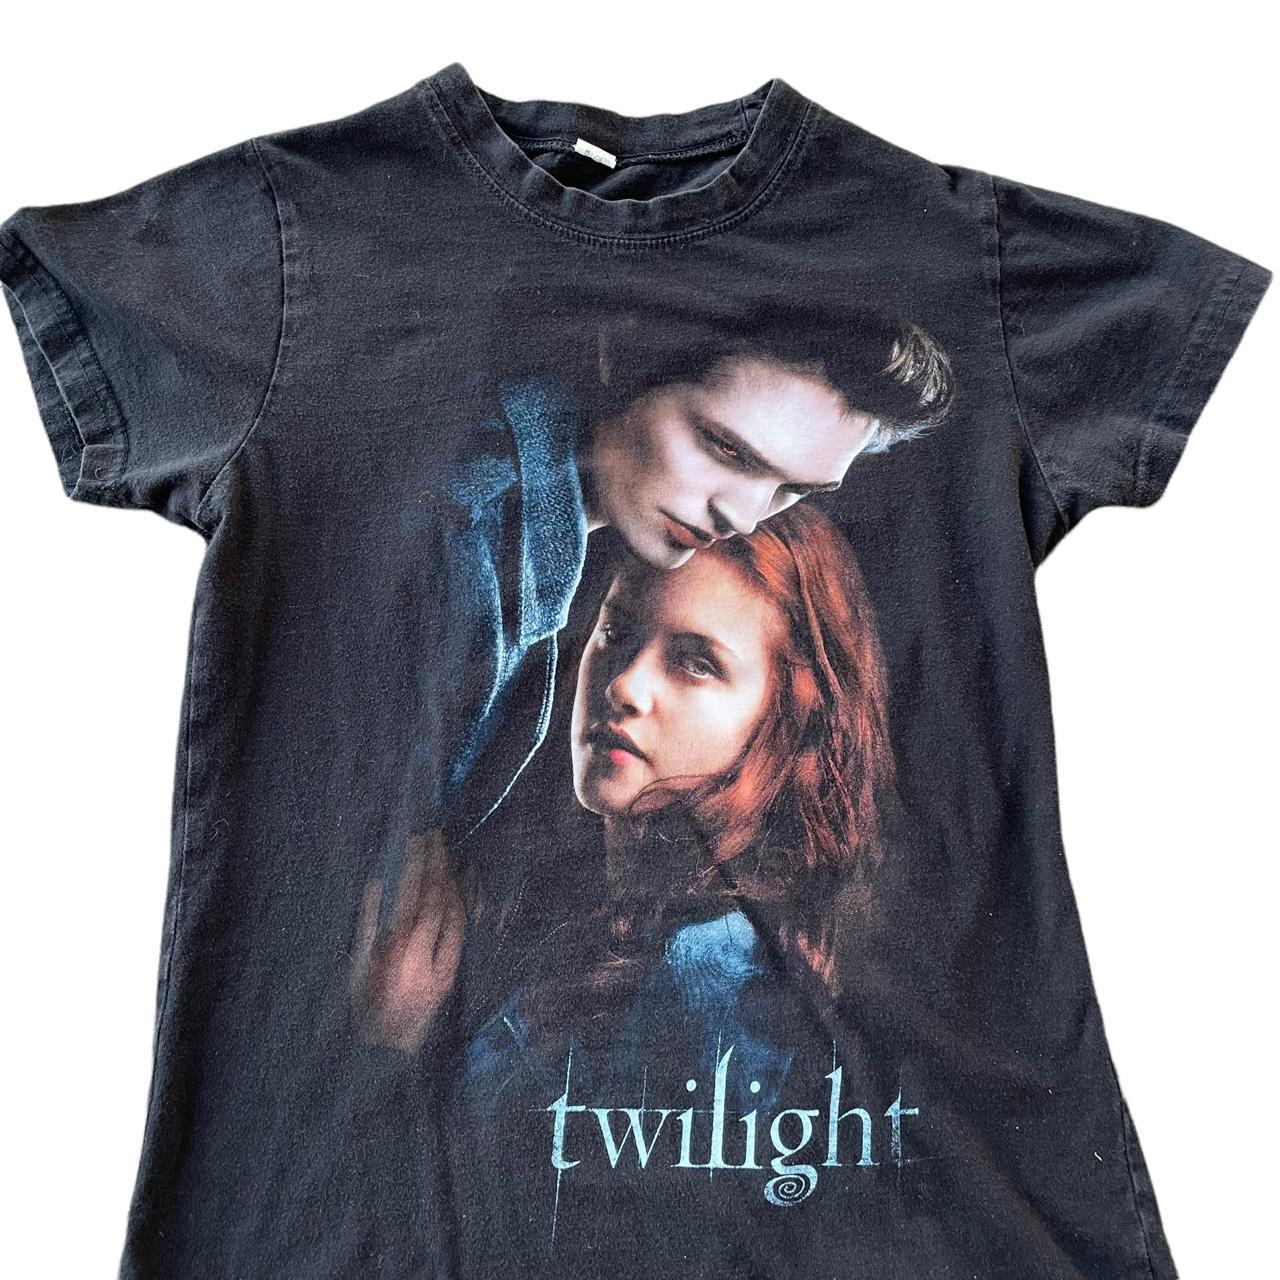 Product Image 2 - Twilight Merch T-Shirt

Iconic twilight bella